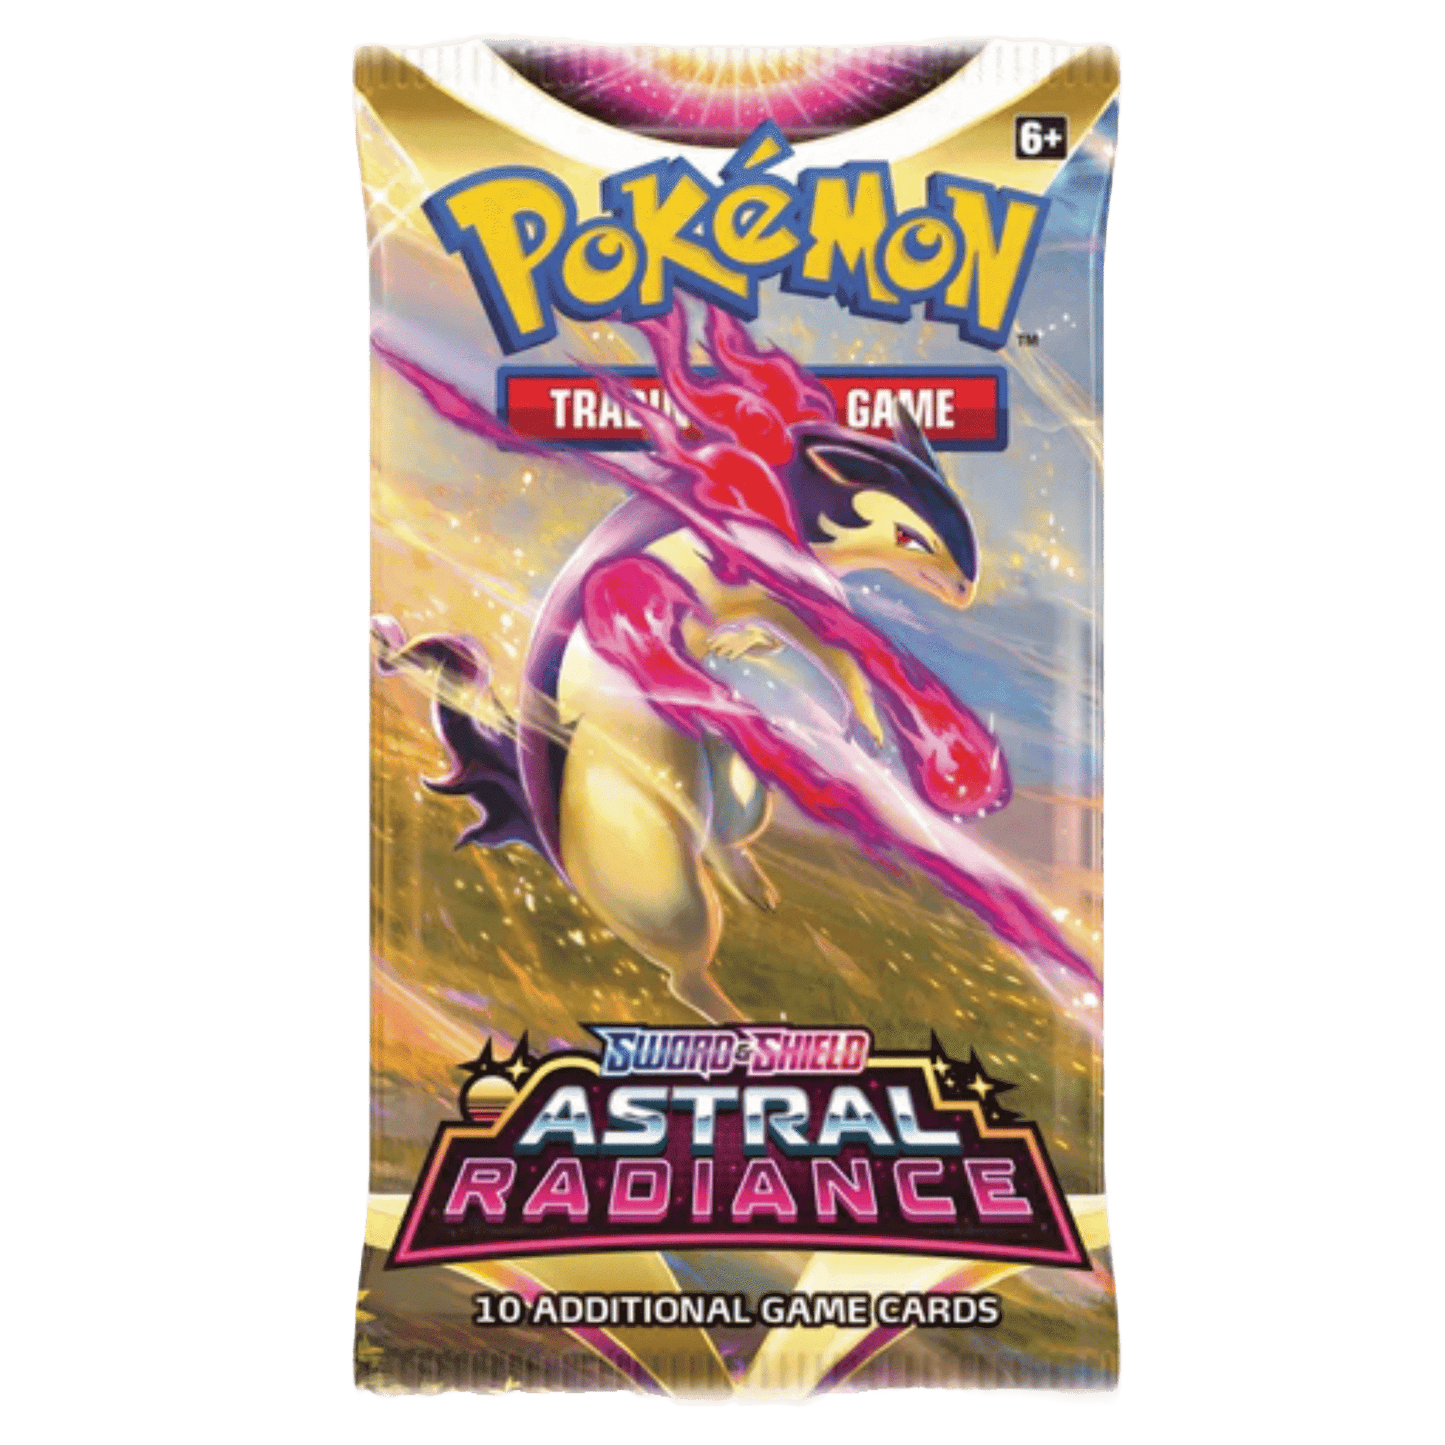 Pokémon: Astral Radiance Booster Pack